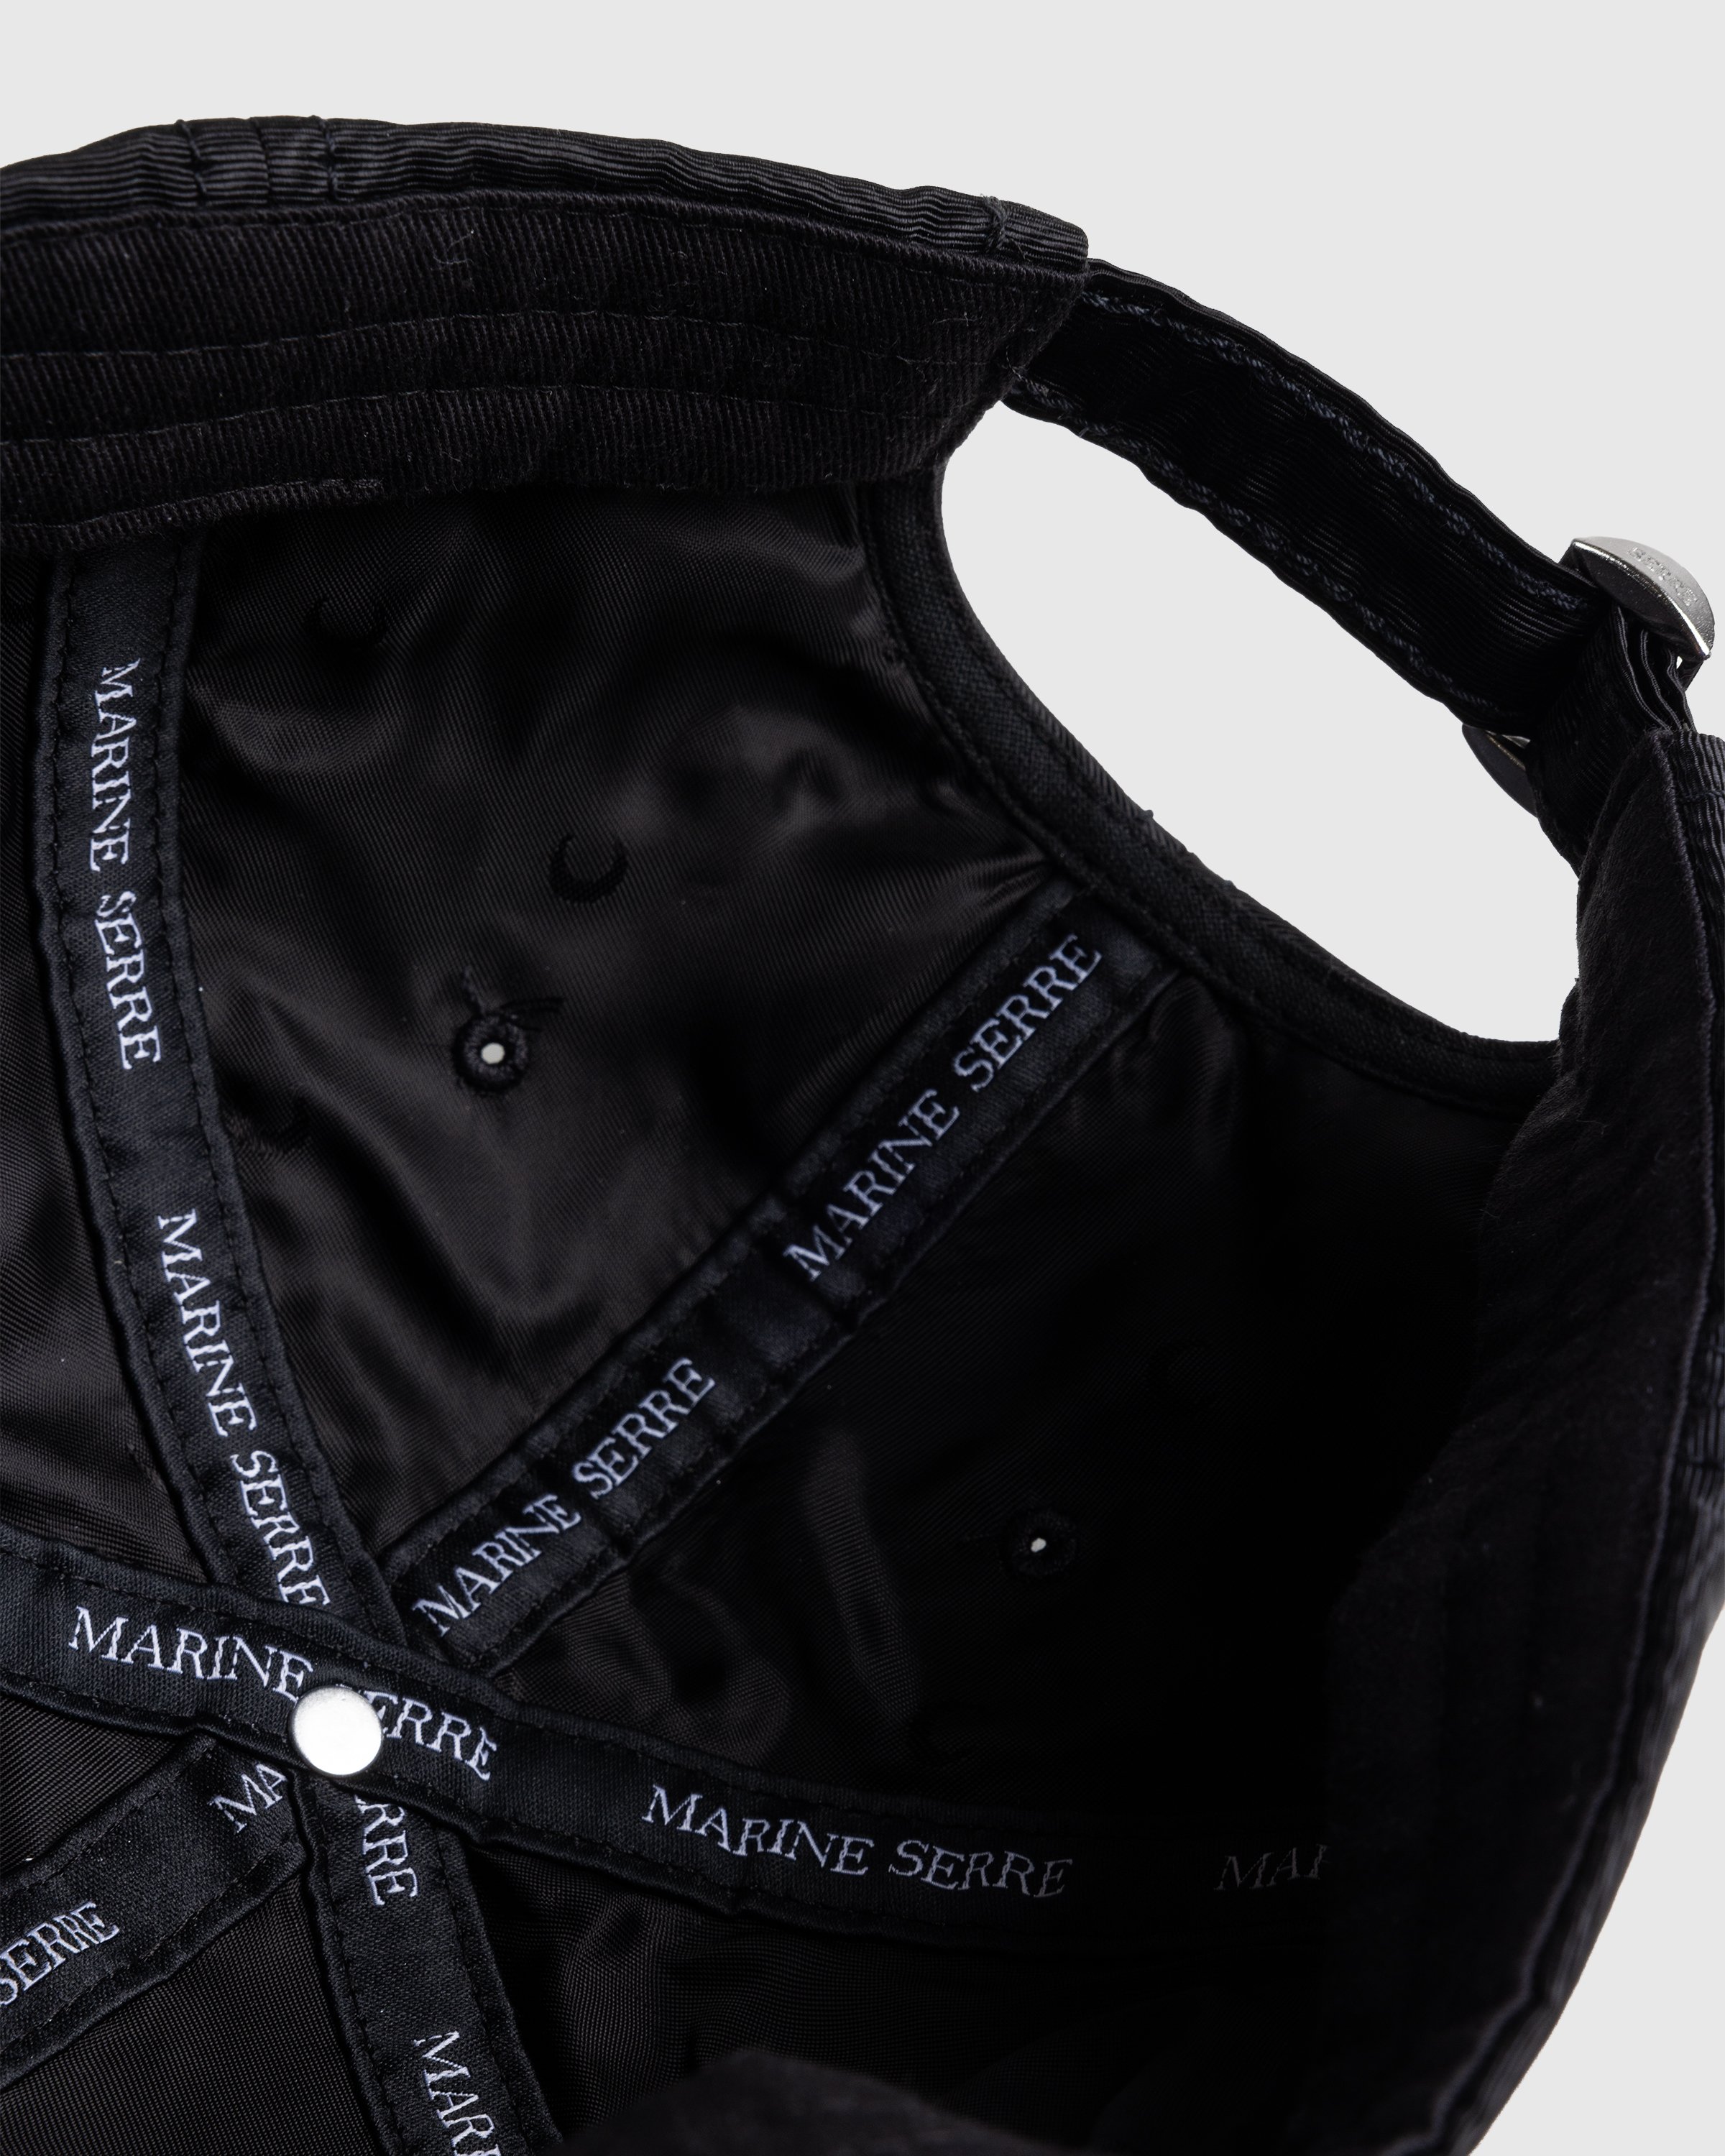 Marine Serre - Embroidered Regenerated Moire Cap Black - Accessories - Black - Image 5